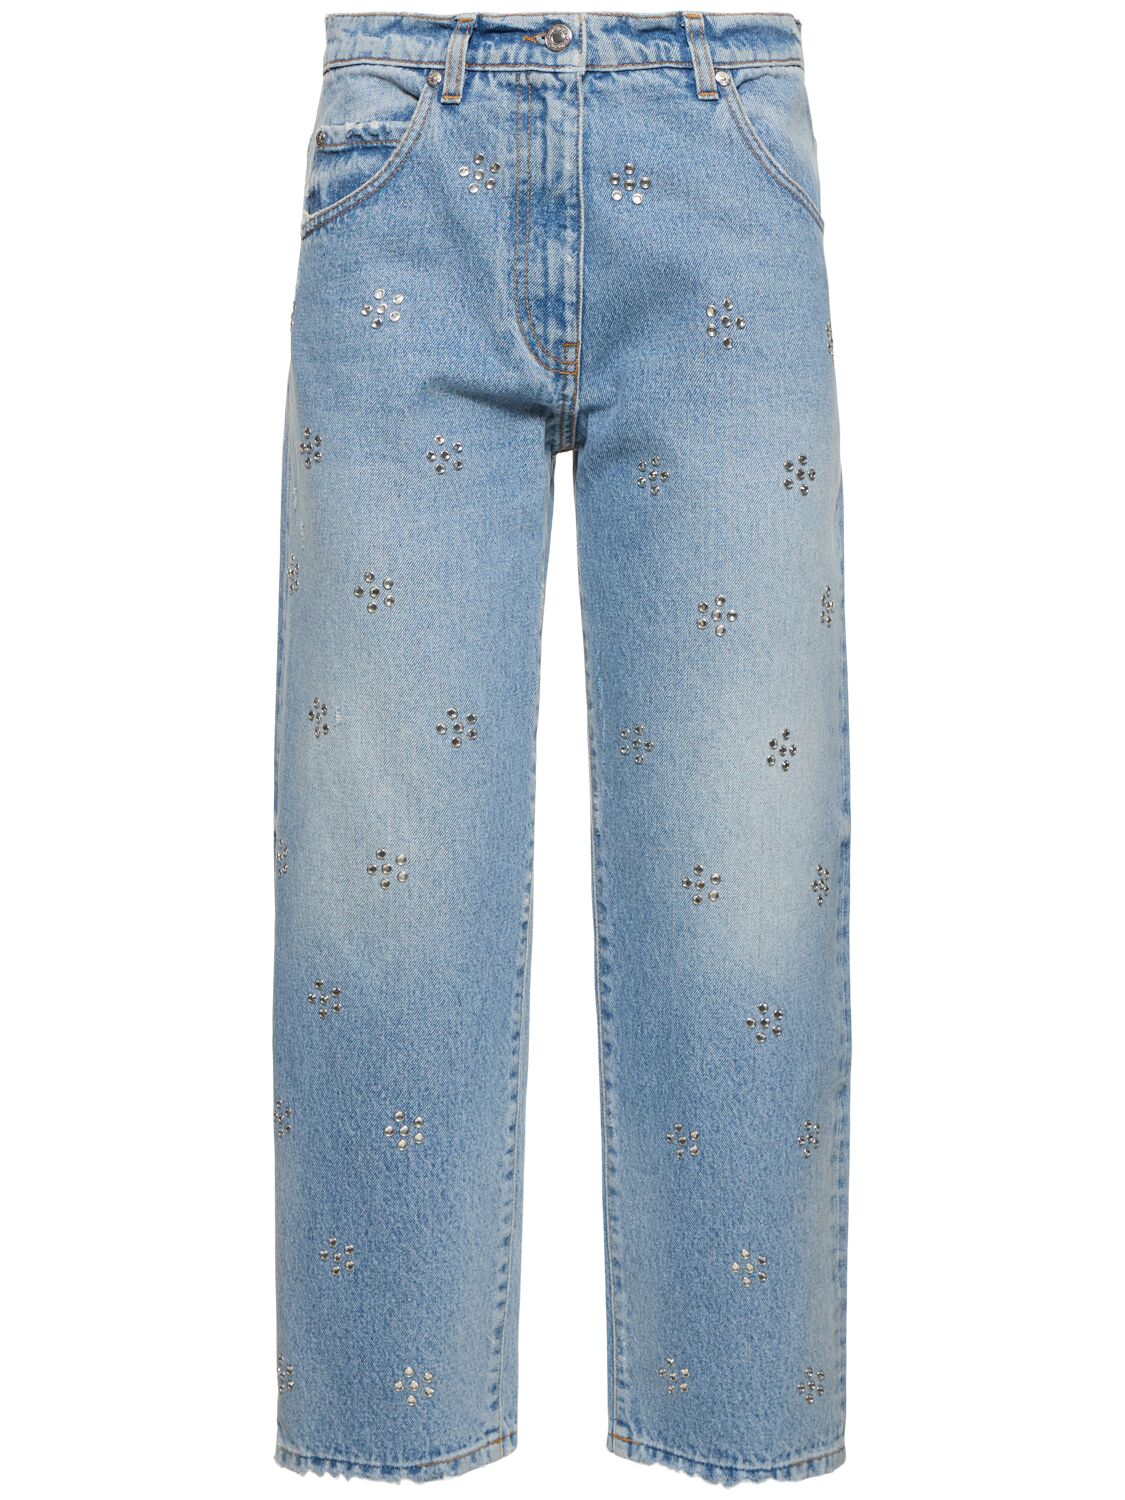 Image of Cotton Denim Crop Jeans